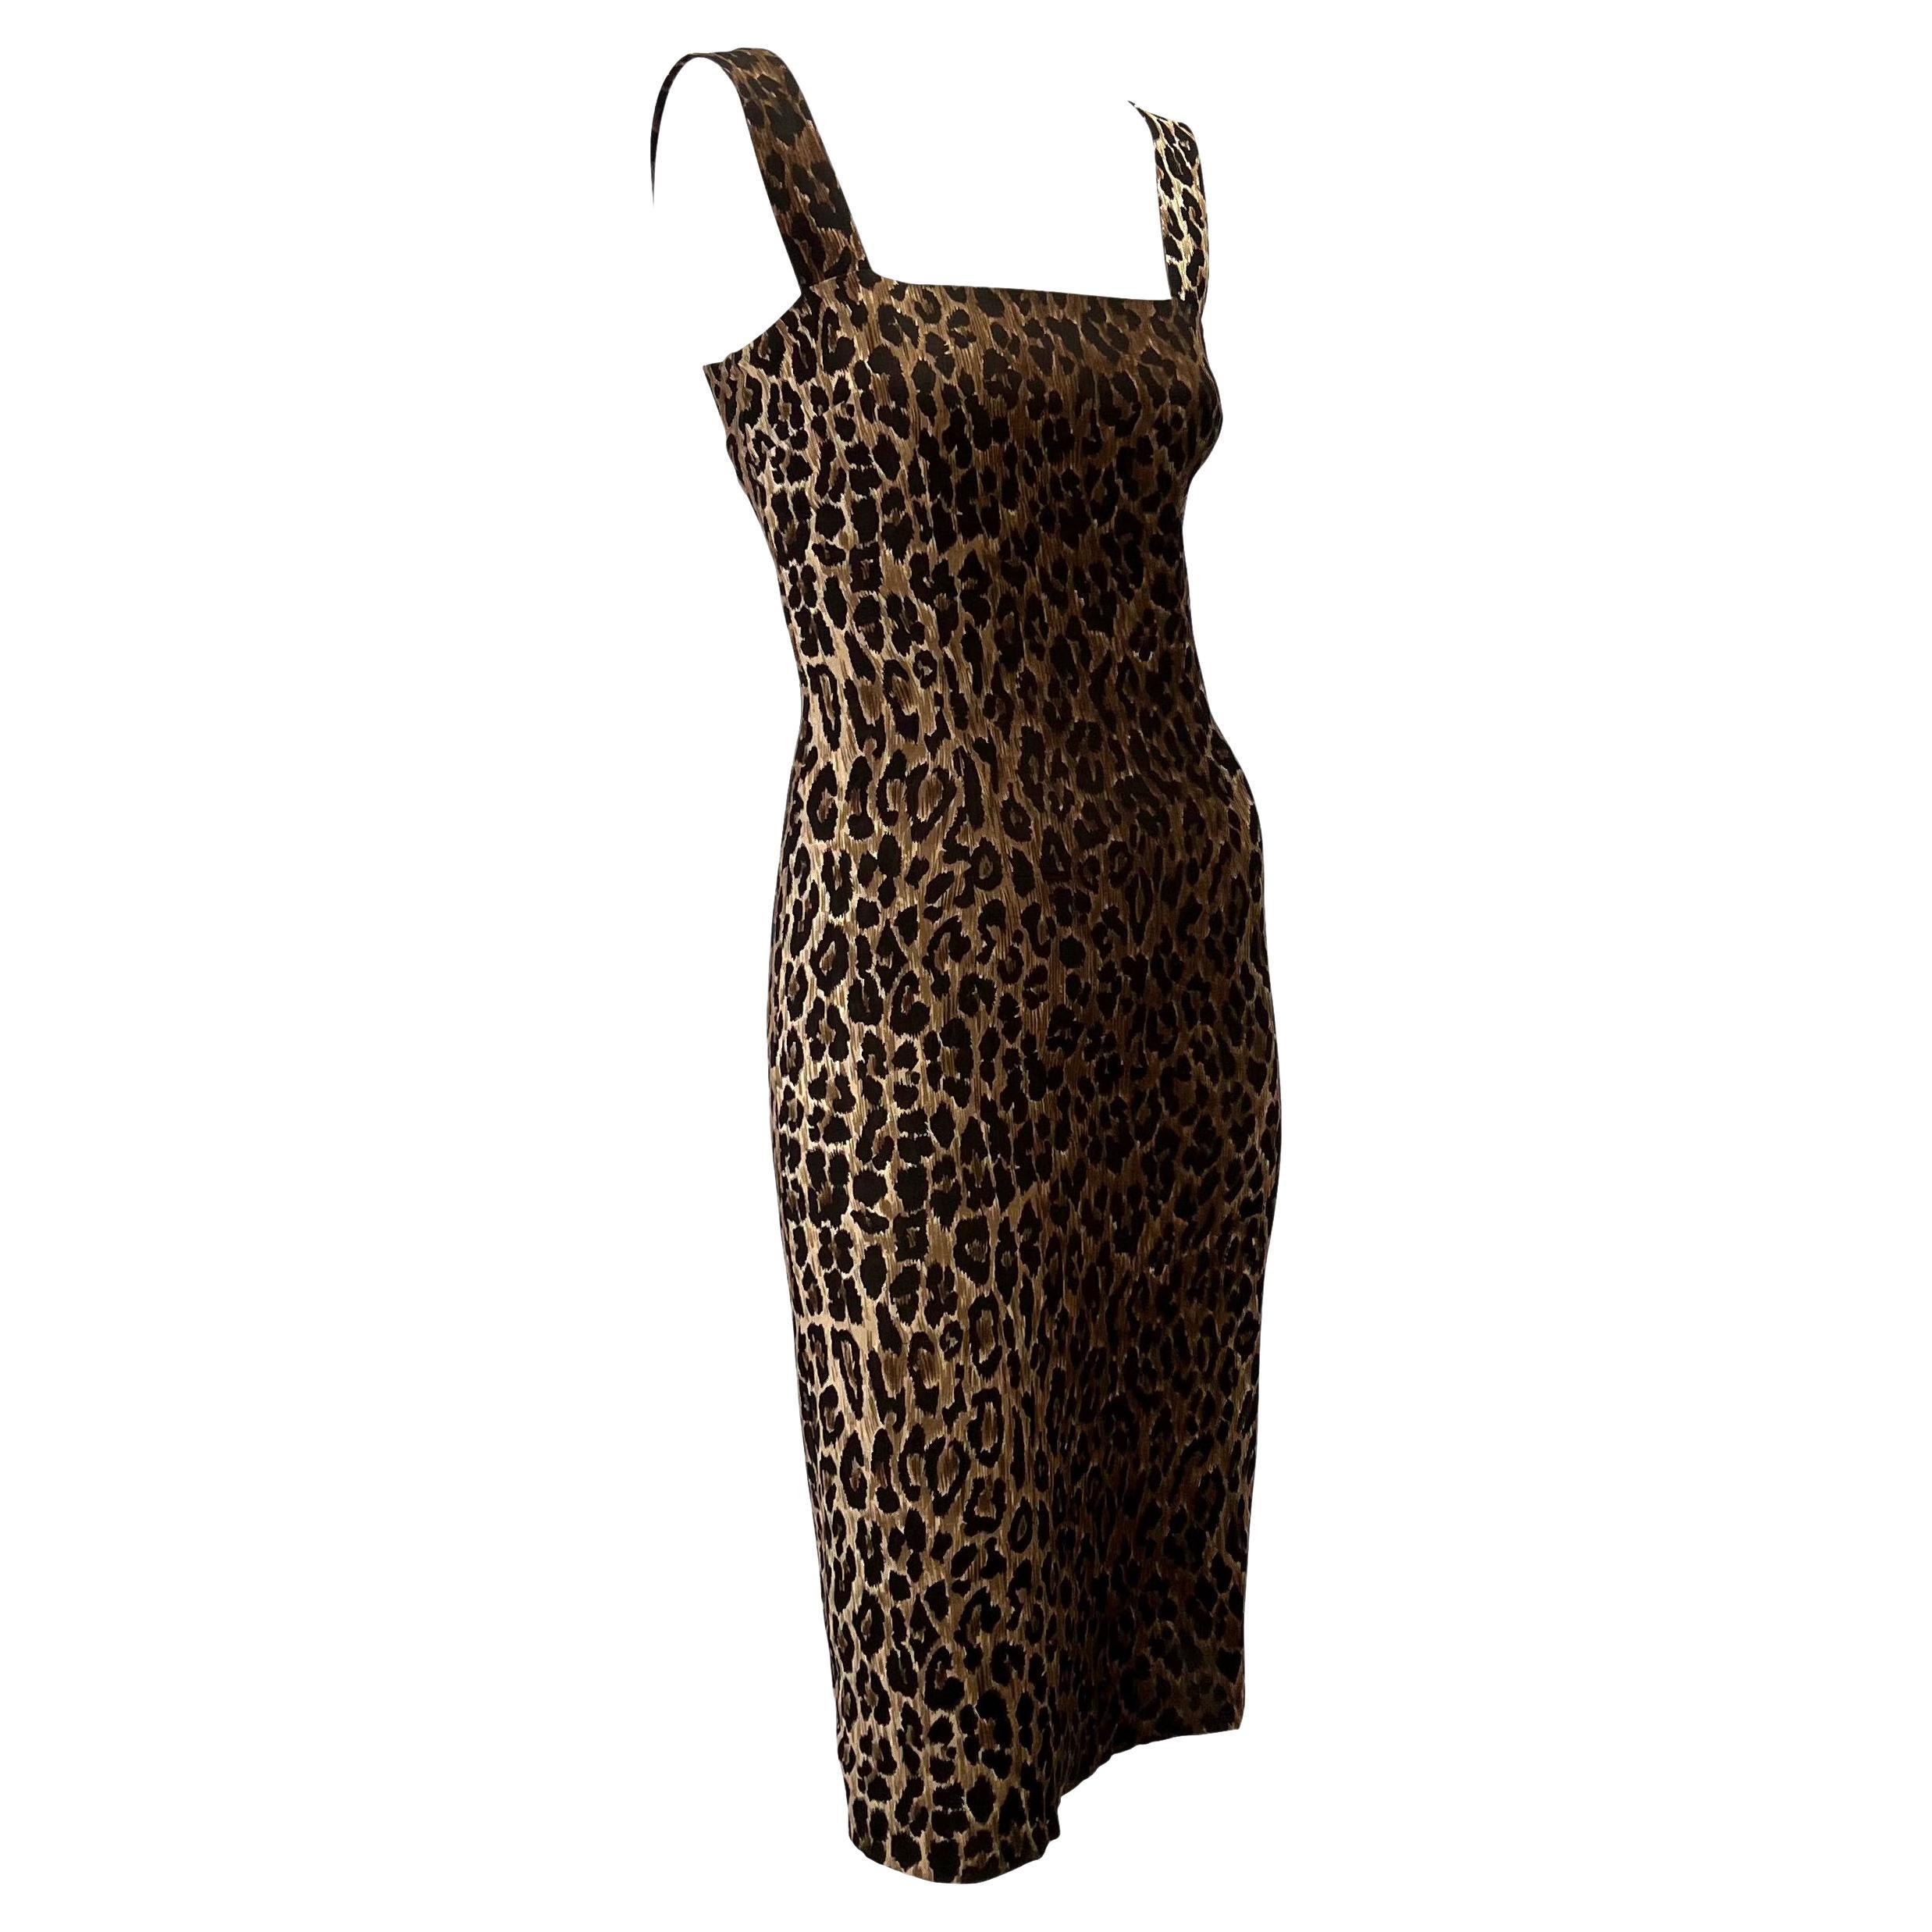 S/S 1997 Dolce & Gabbana Cheetah Print Silk Sleeveless Bodycon Pin-Up Dress For Sale 1